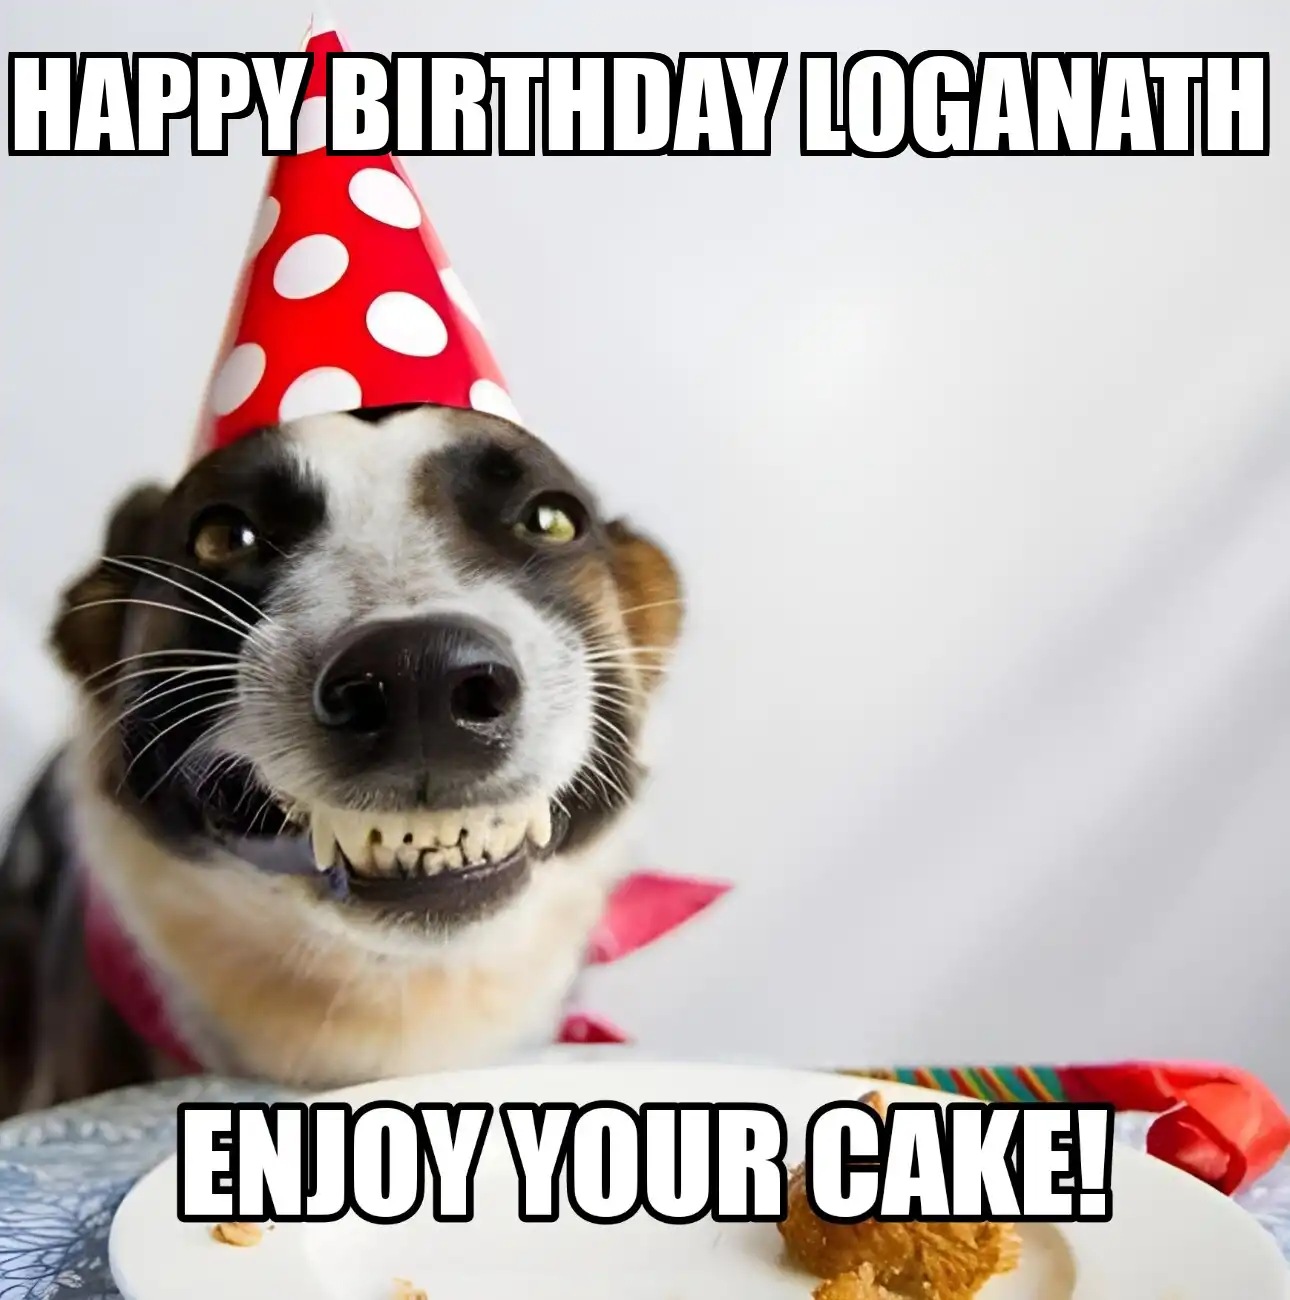 Happy Birthday Loganath Enjoy Your Cake Dog Meme